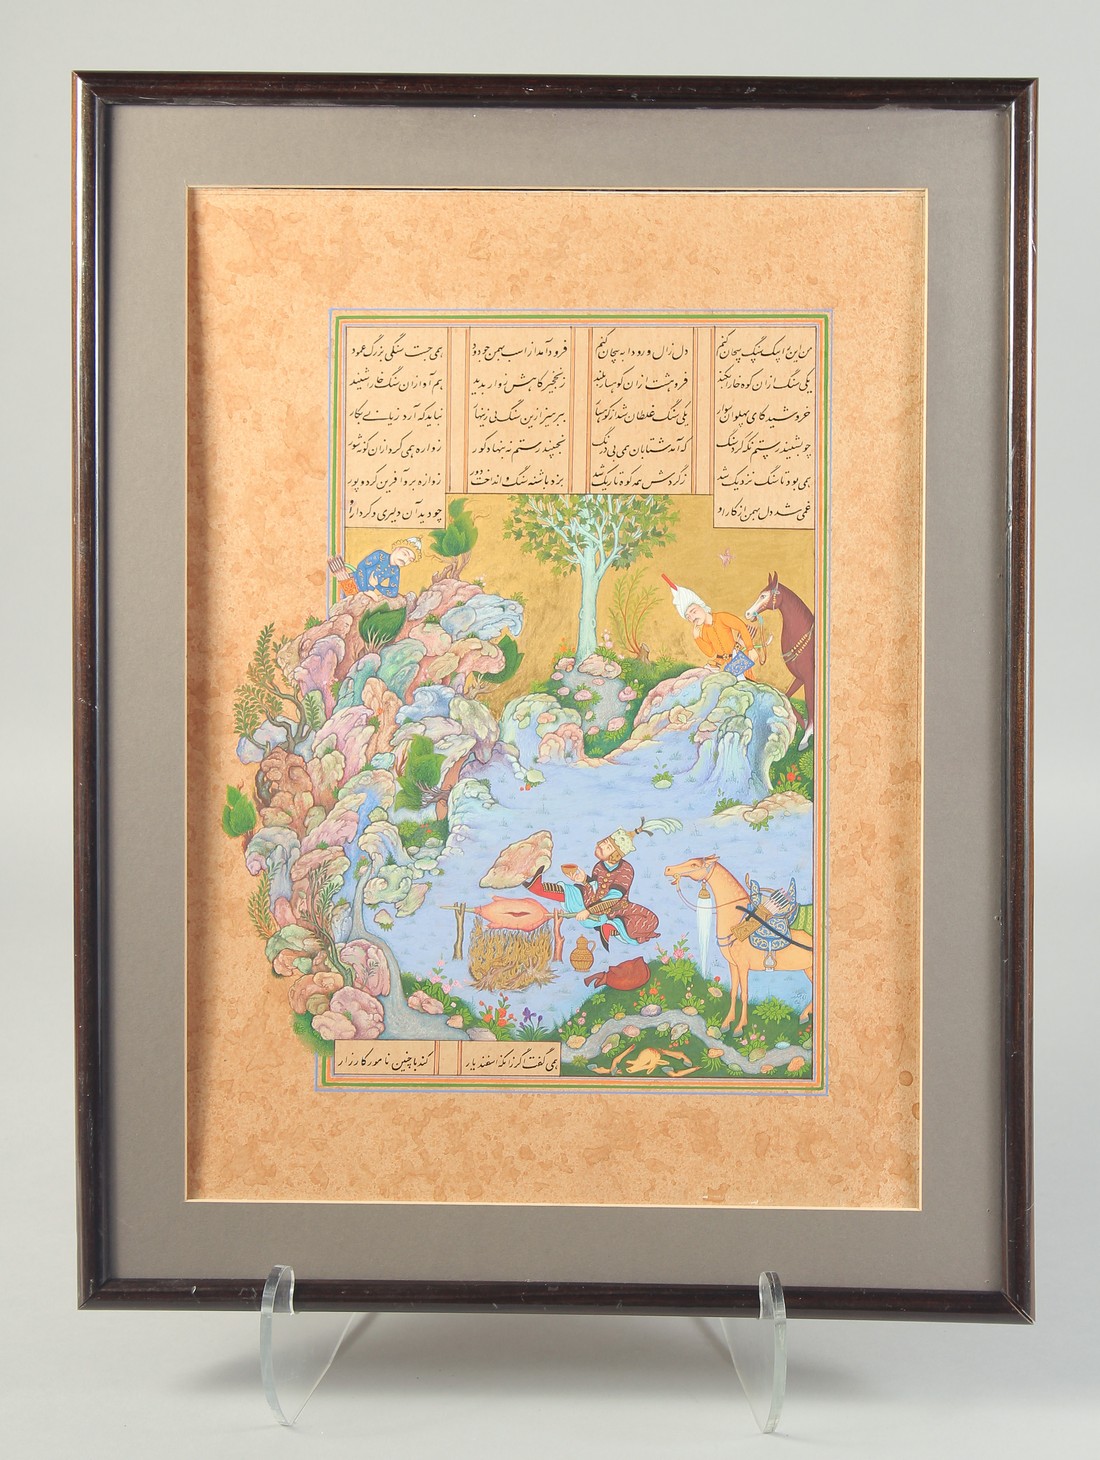 A LARGE FINE PERSIAN MINIATURE PAINTING ATTRIBUTED TO QASIM BIN 'ALI, depicting Rustam kicking the